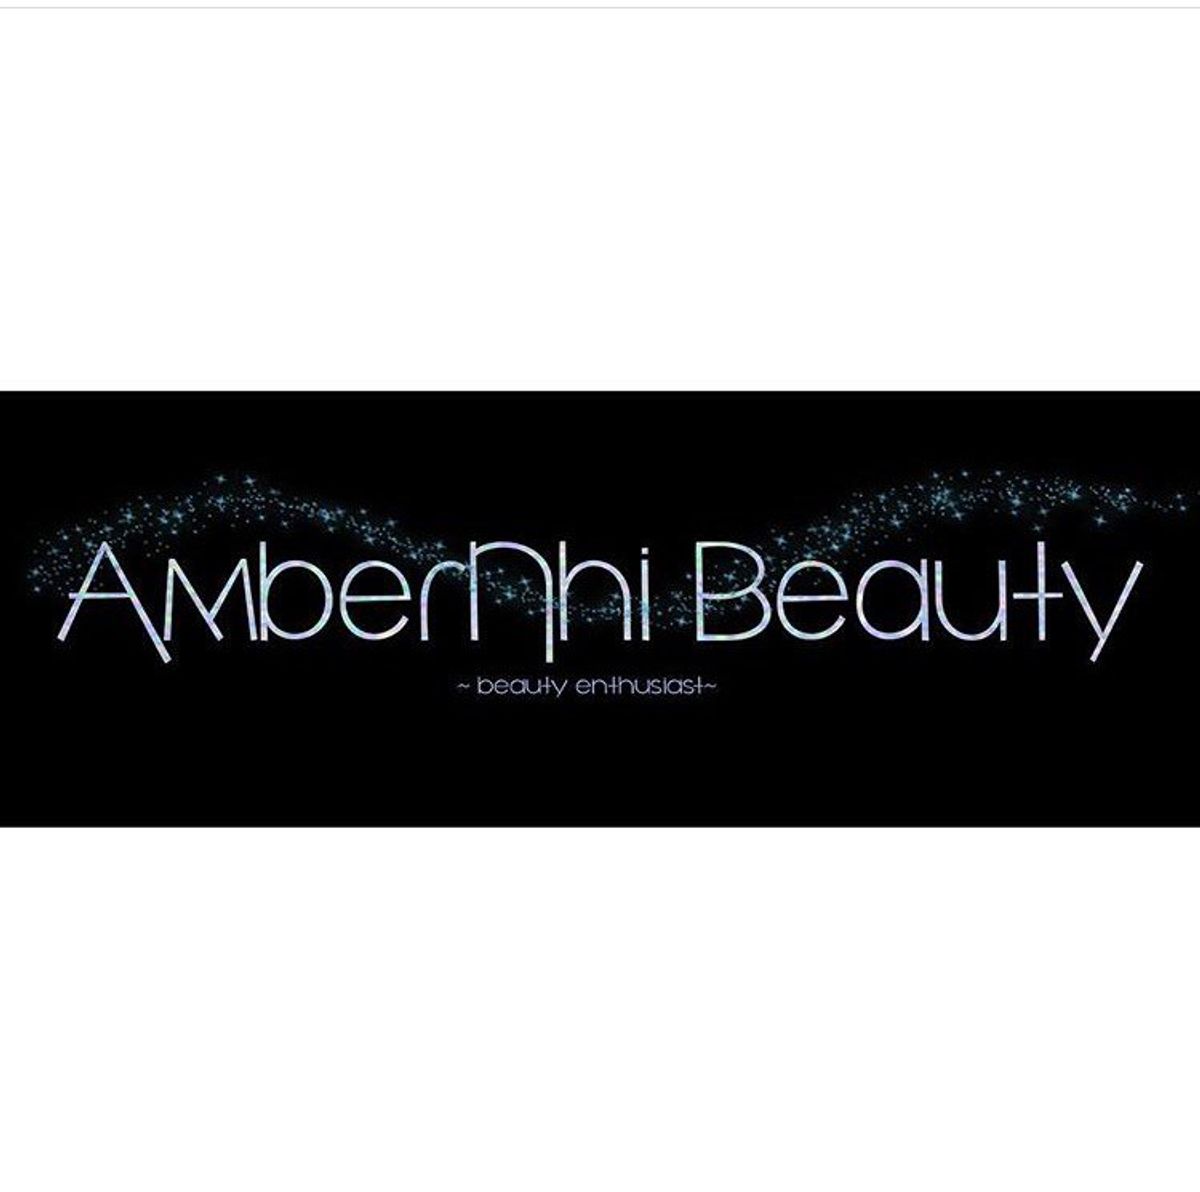 AmberNih Beauty: Inspiring and Enhancing Beauty